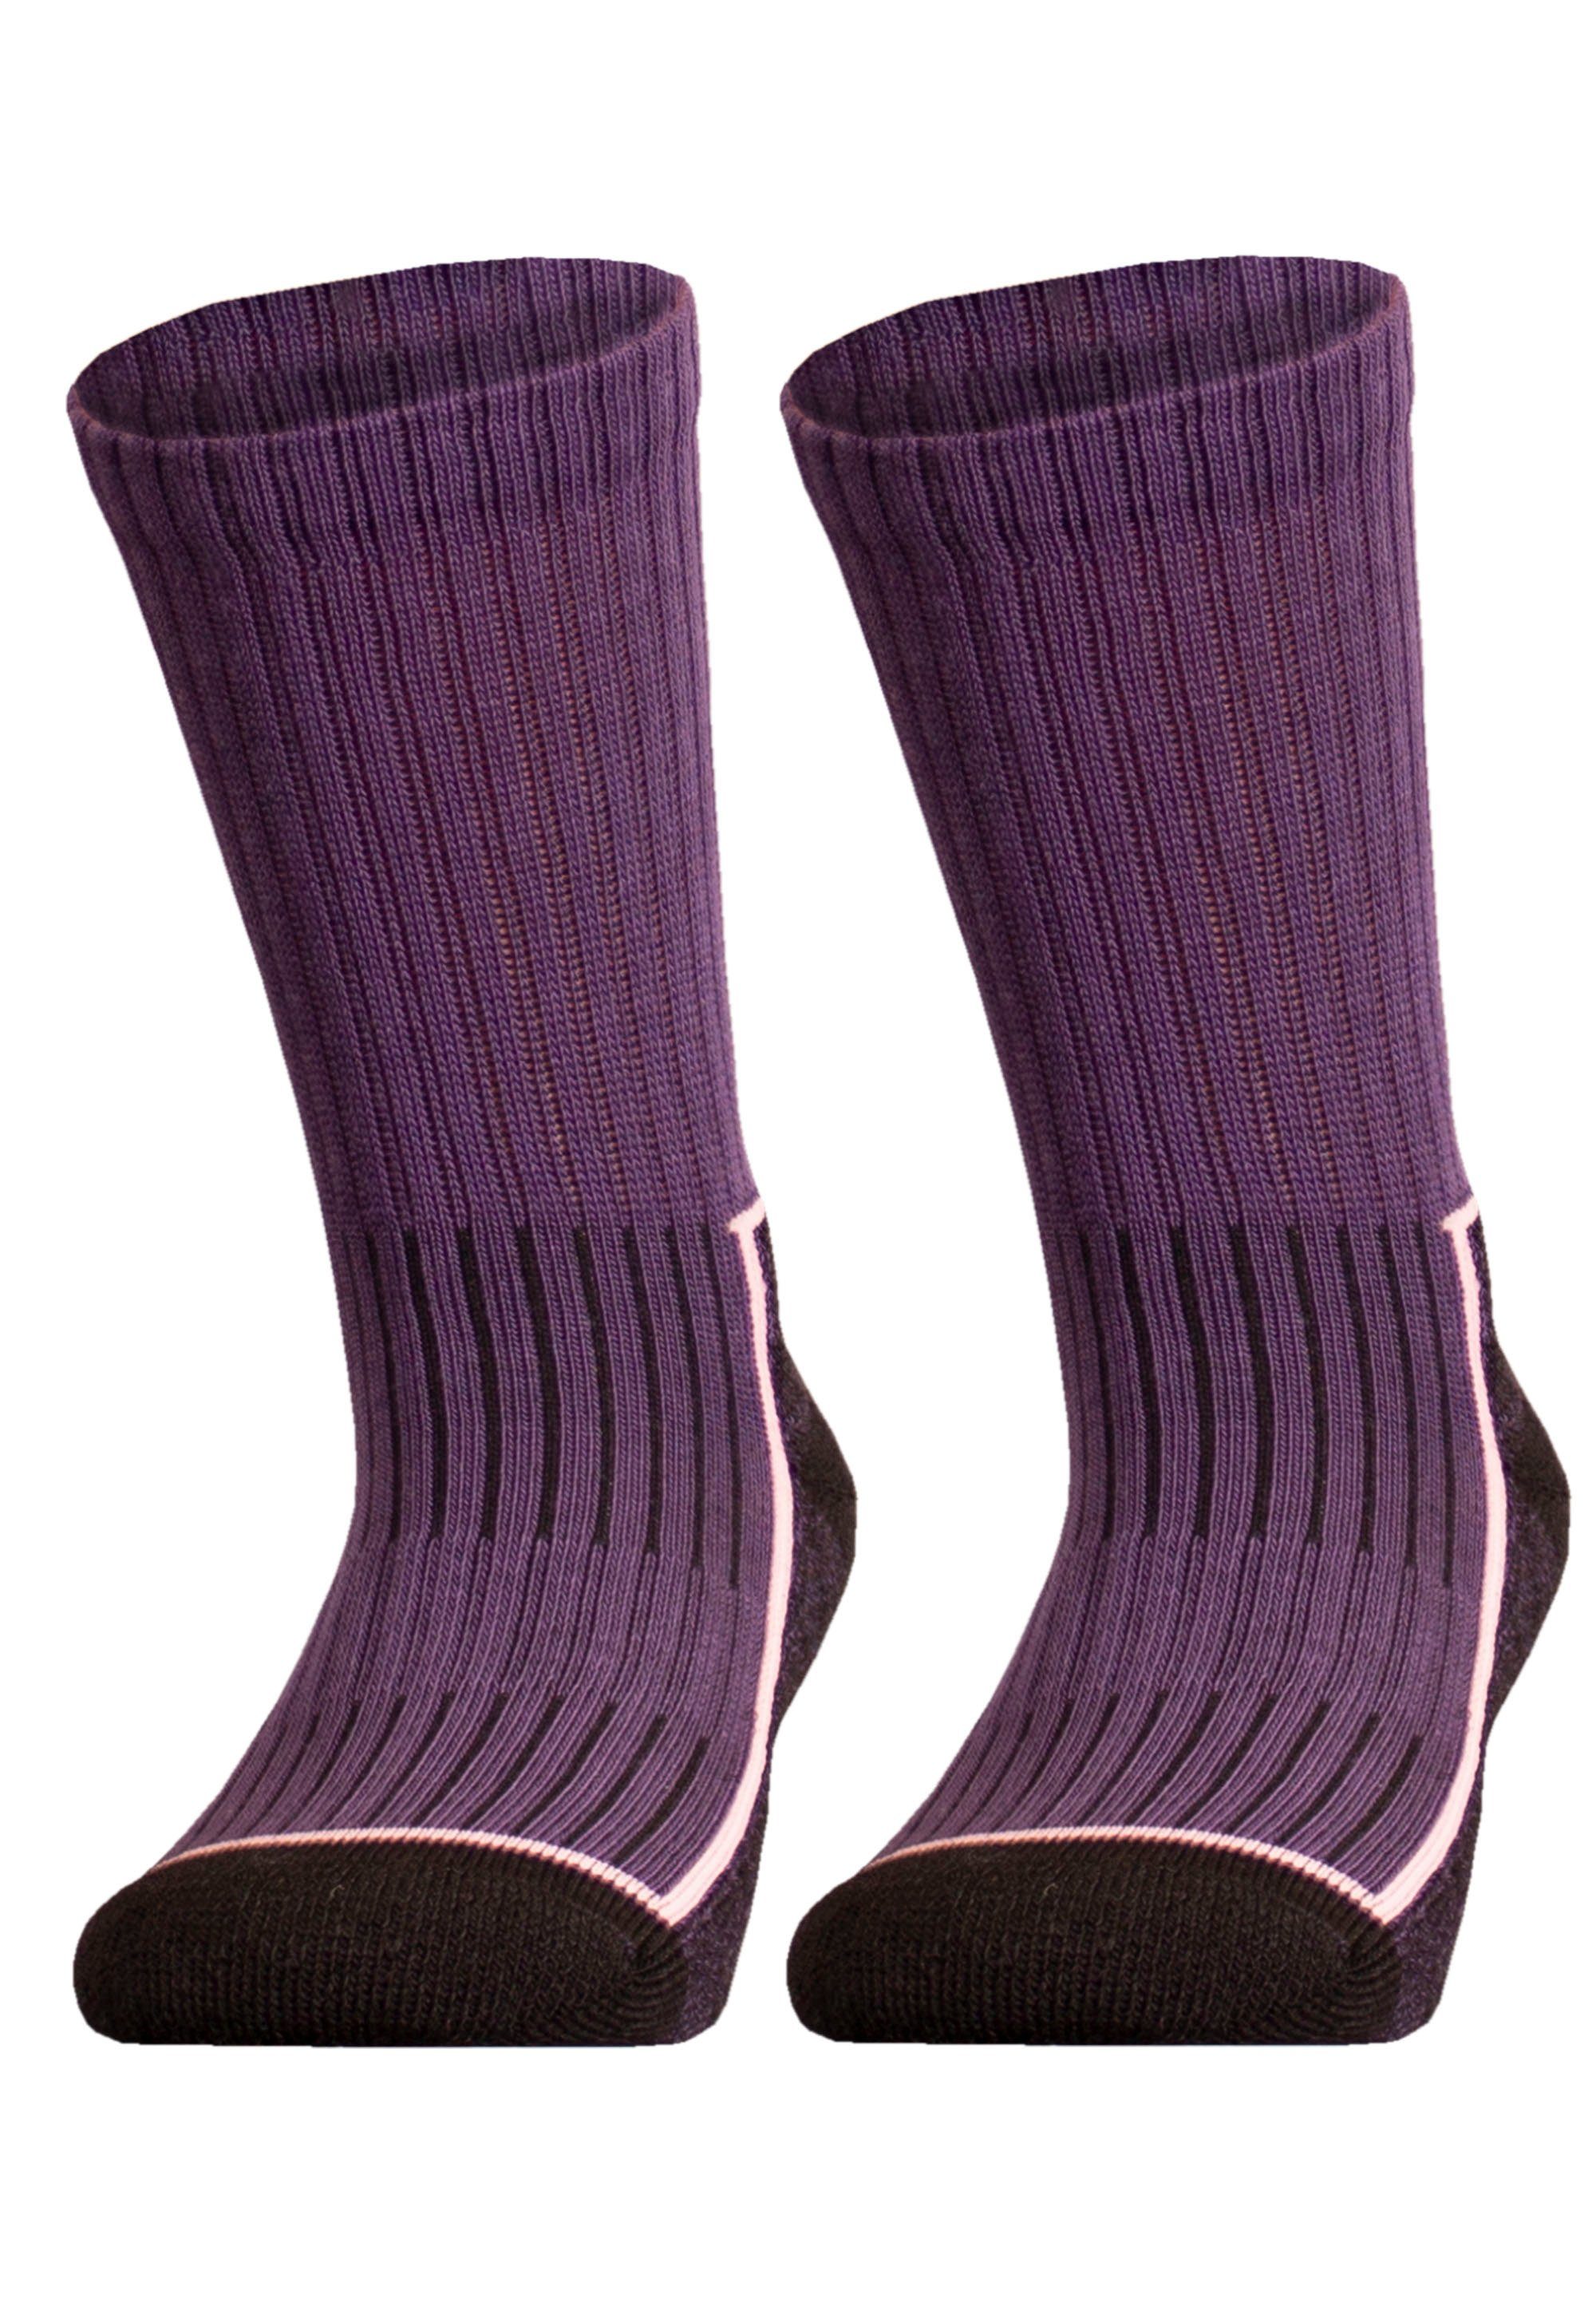 UphillSport Socken SAANA mit Flextech-Struktur lila JR 2er Pack (2-Paar)